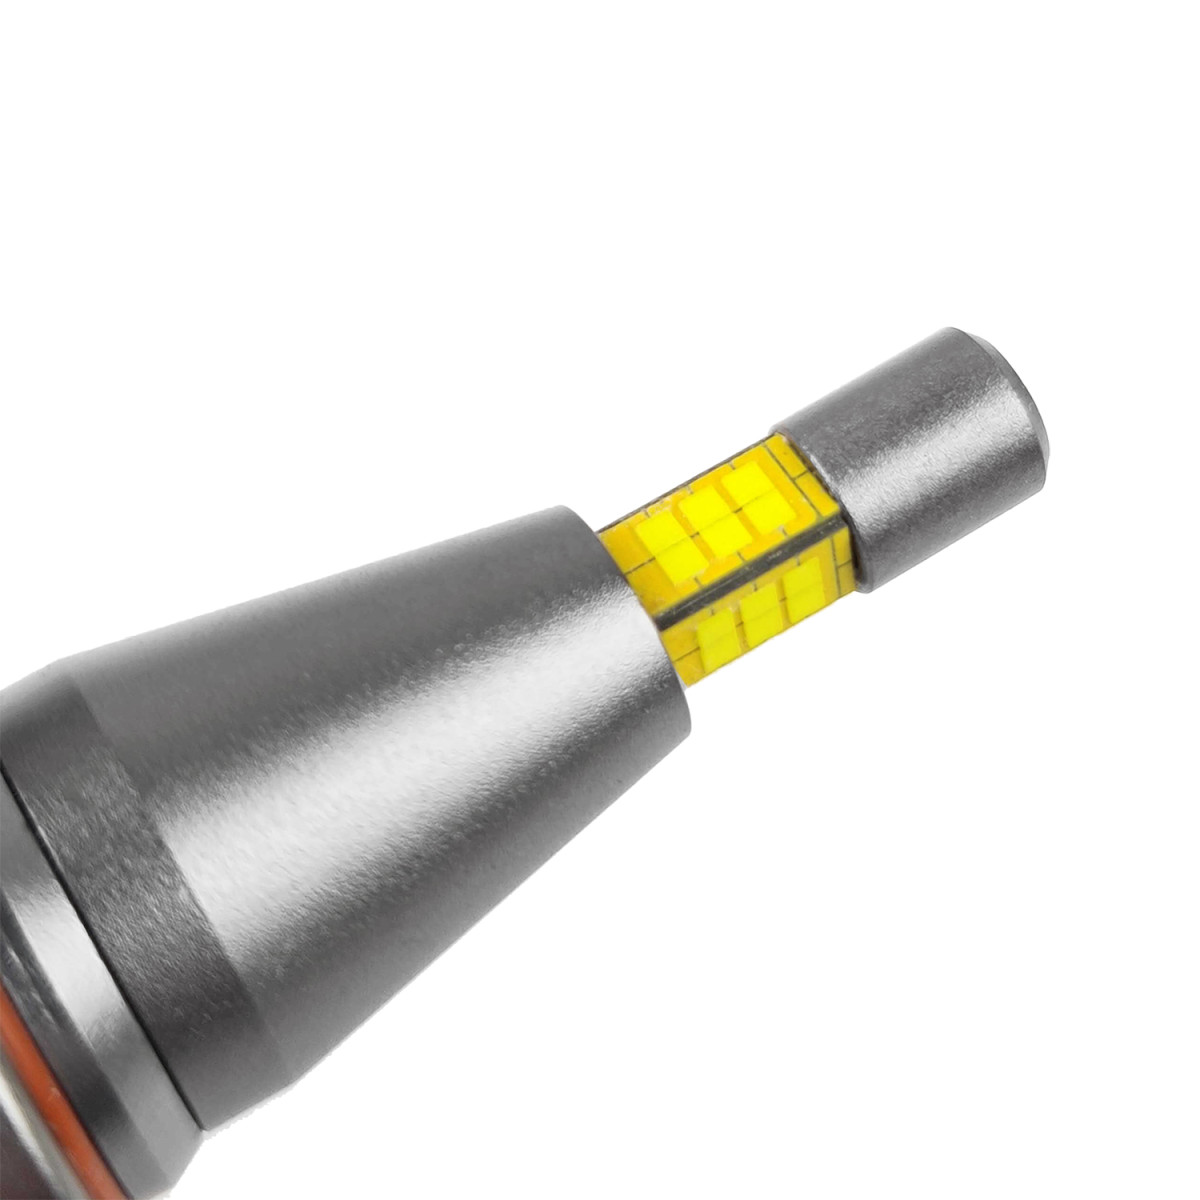 Kit Ampoules H7 LED REVO 360° pour Phare Lenticulaire- 120 Watts,  22 000 Lumens, Blanc 6000K